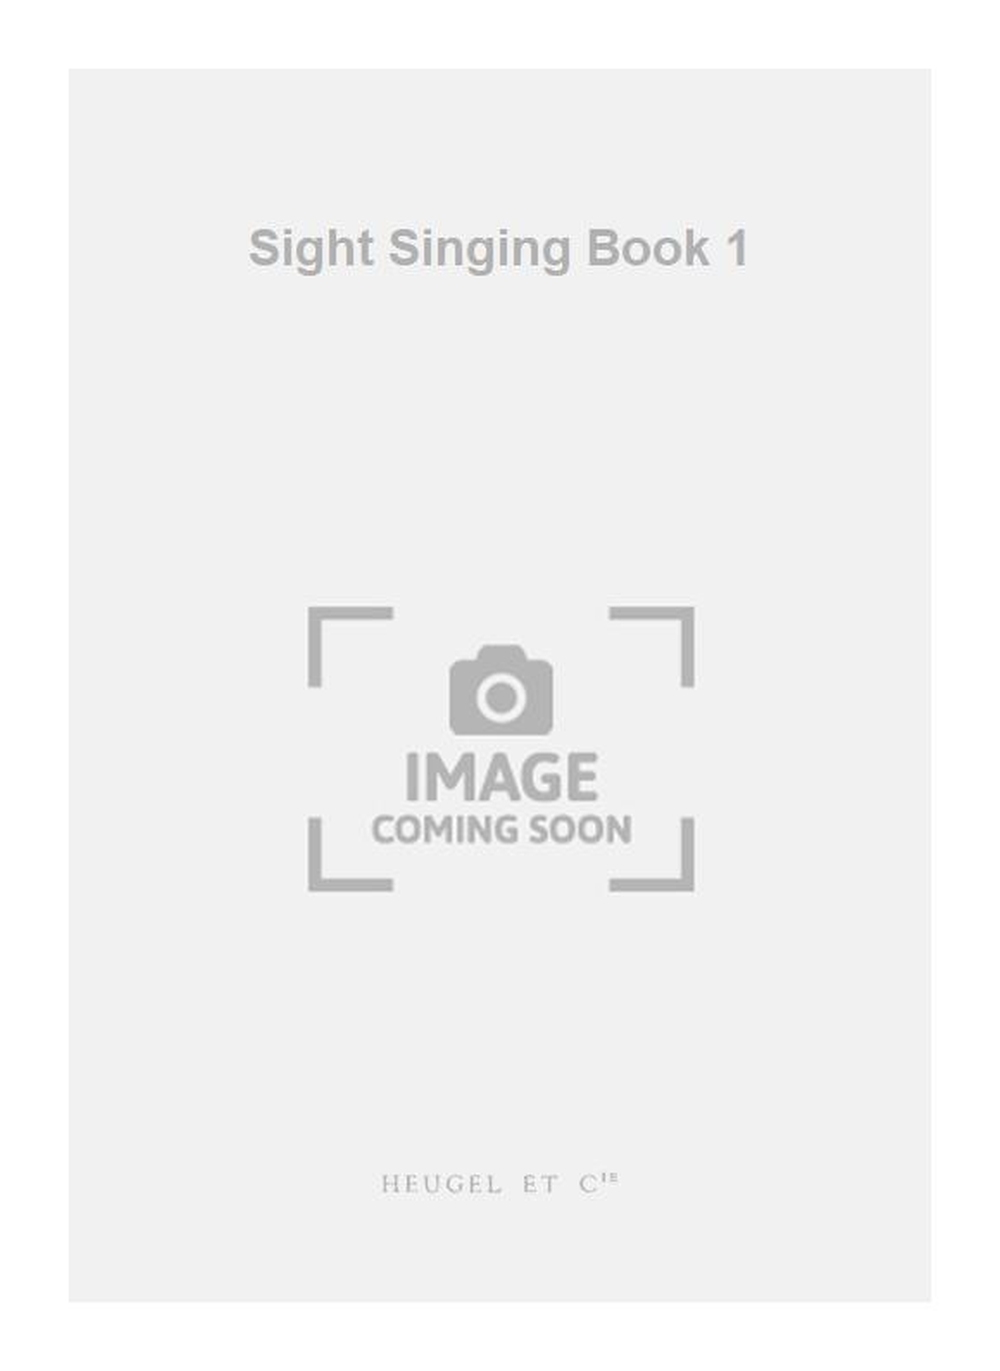 Pittion: Sight Singing Book 1